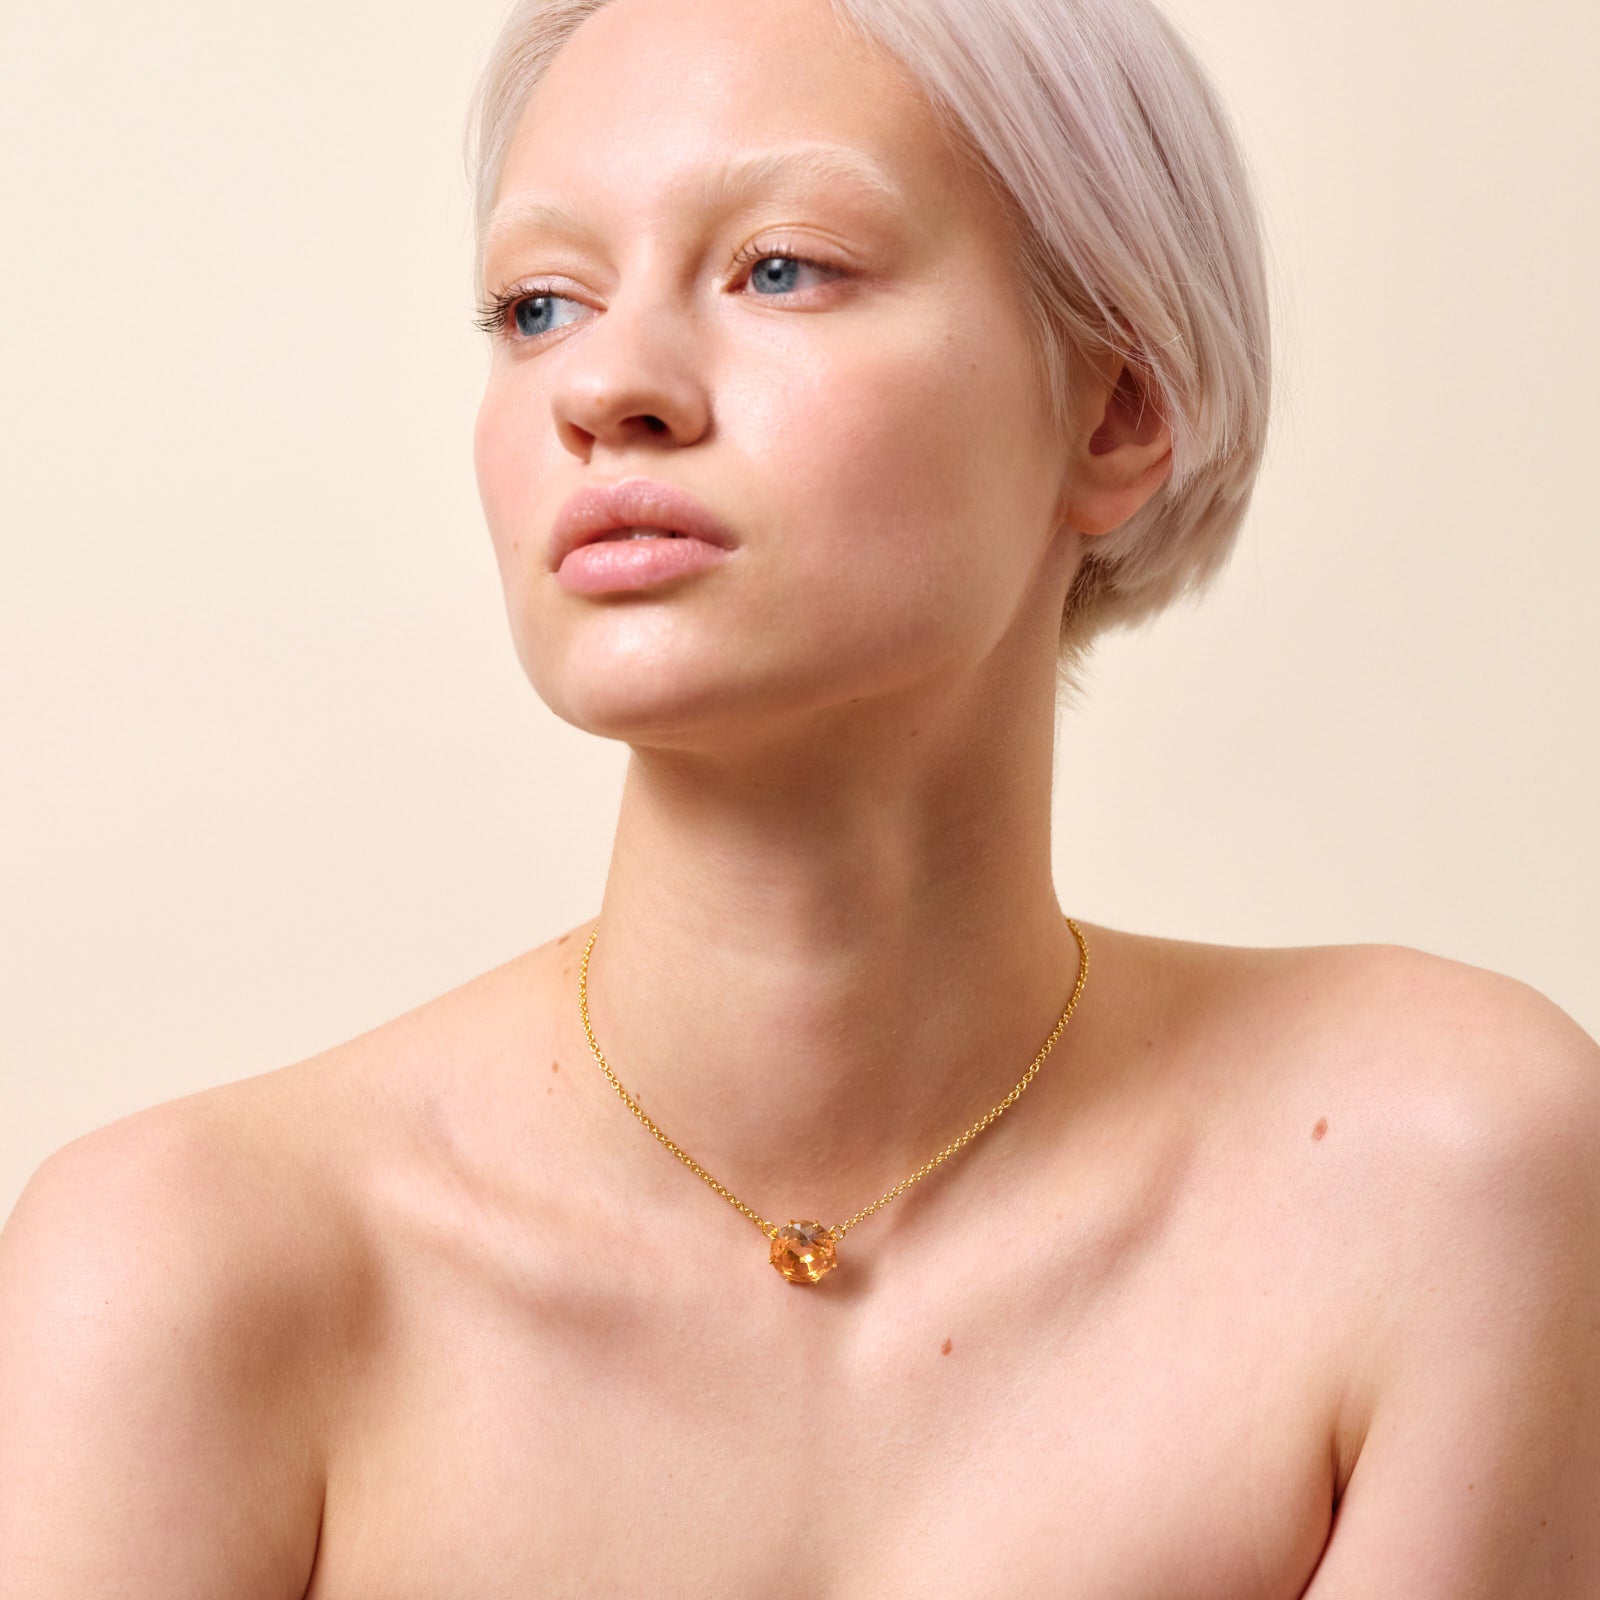 Apricot pink diamantine round stone fine necklace